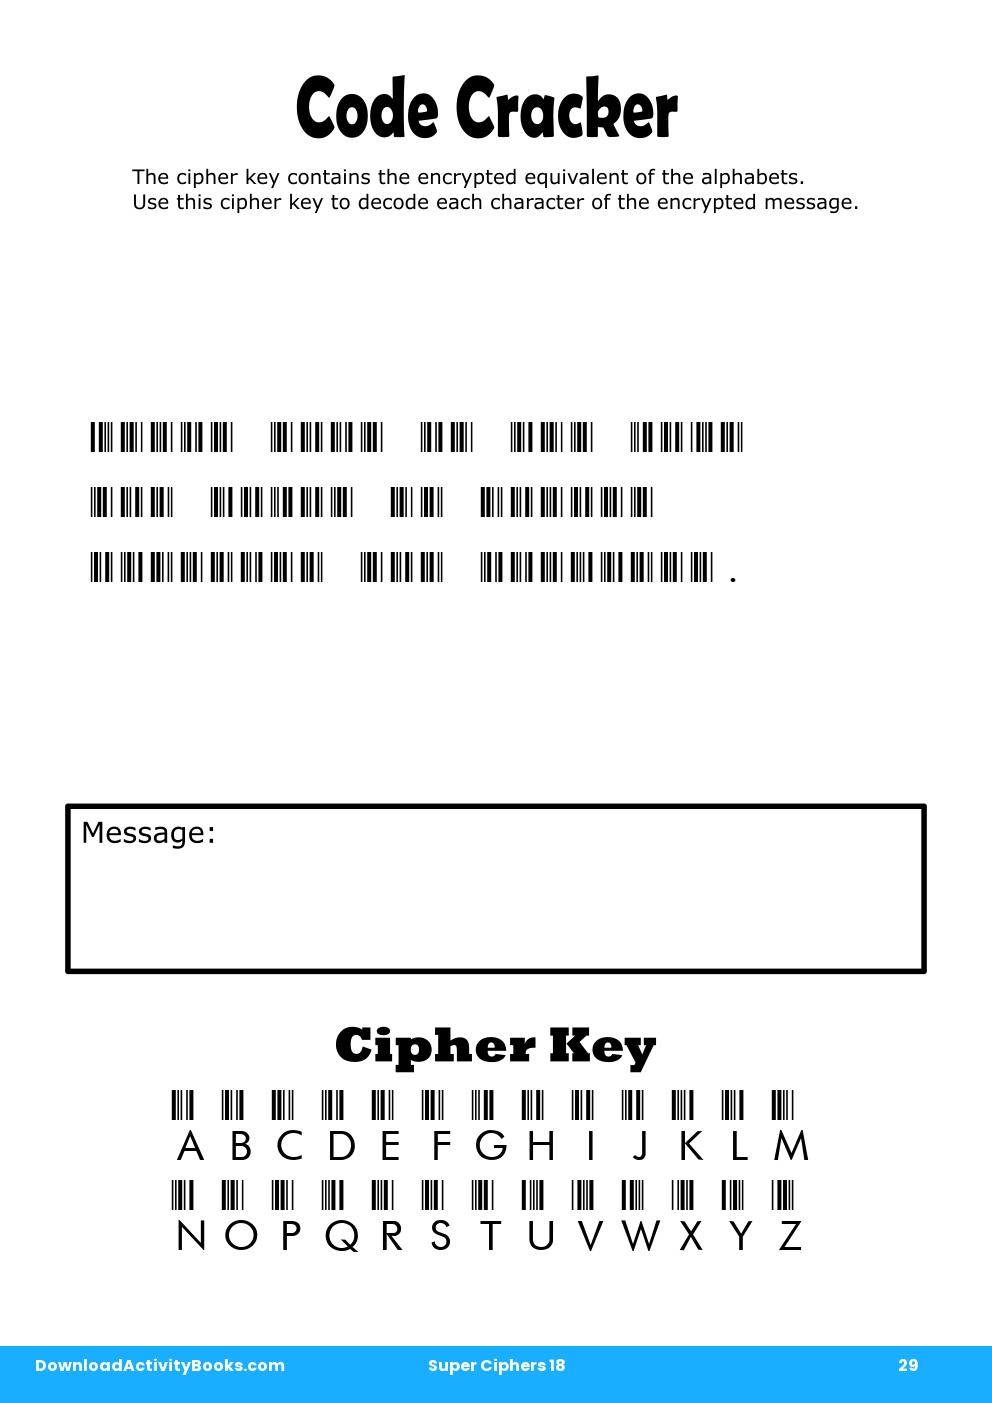 Code Cracker in Super Ciphers 18